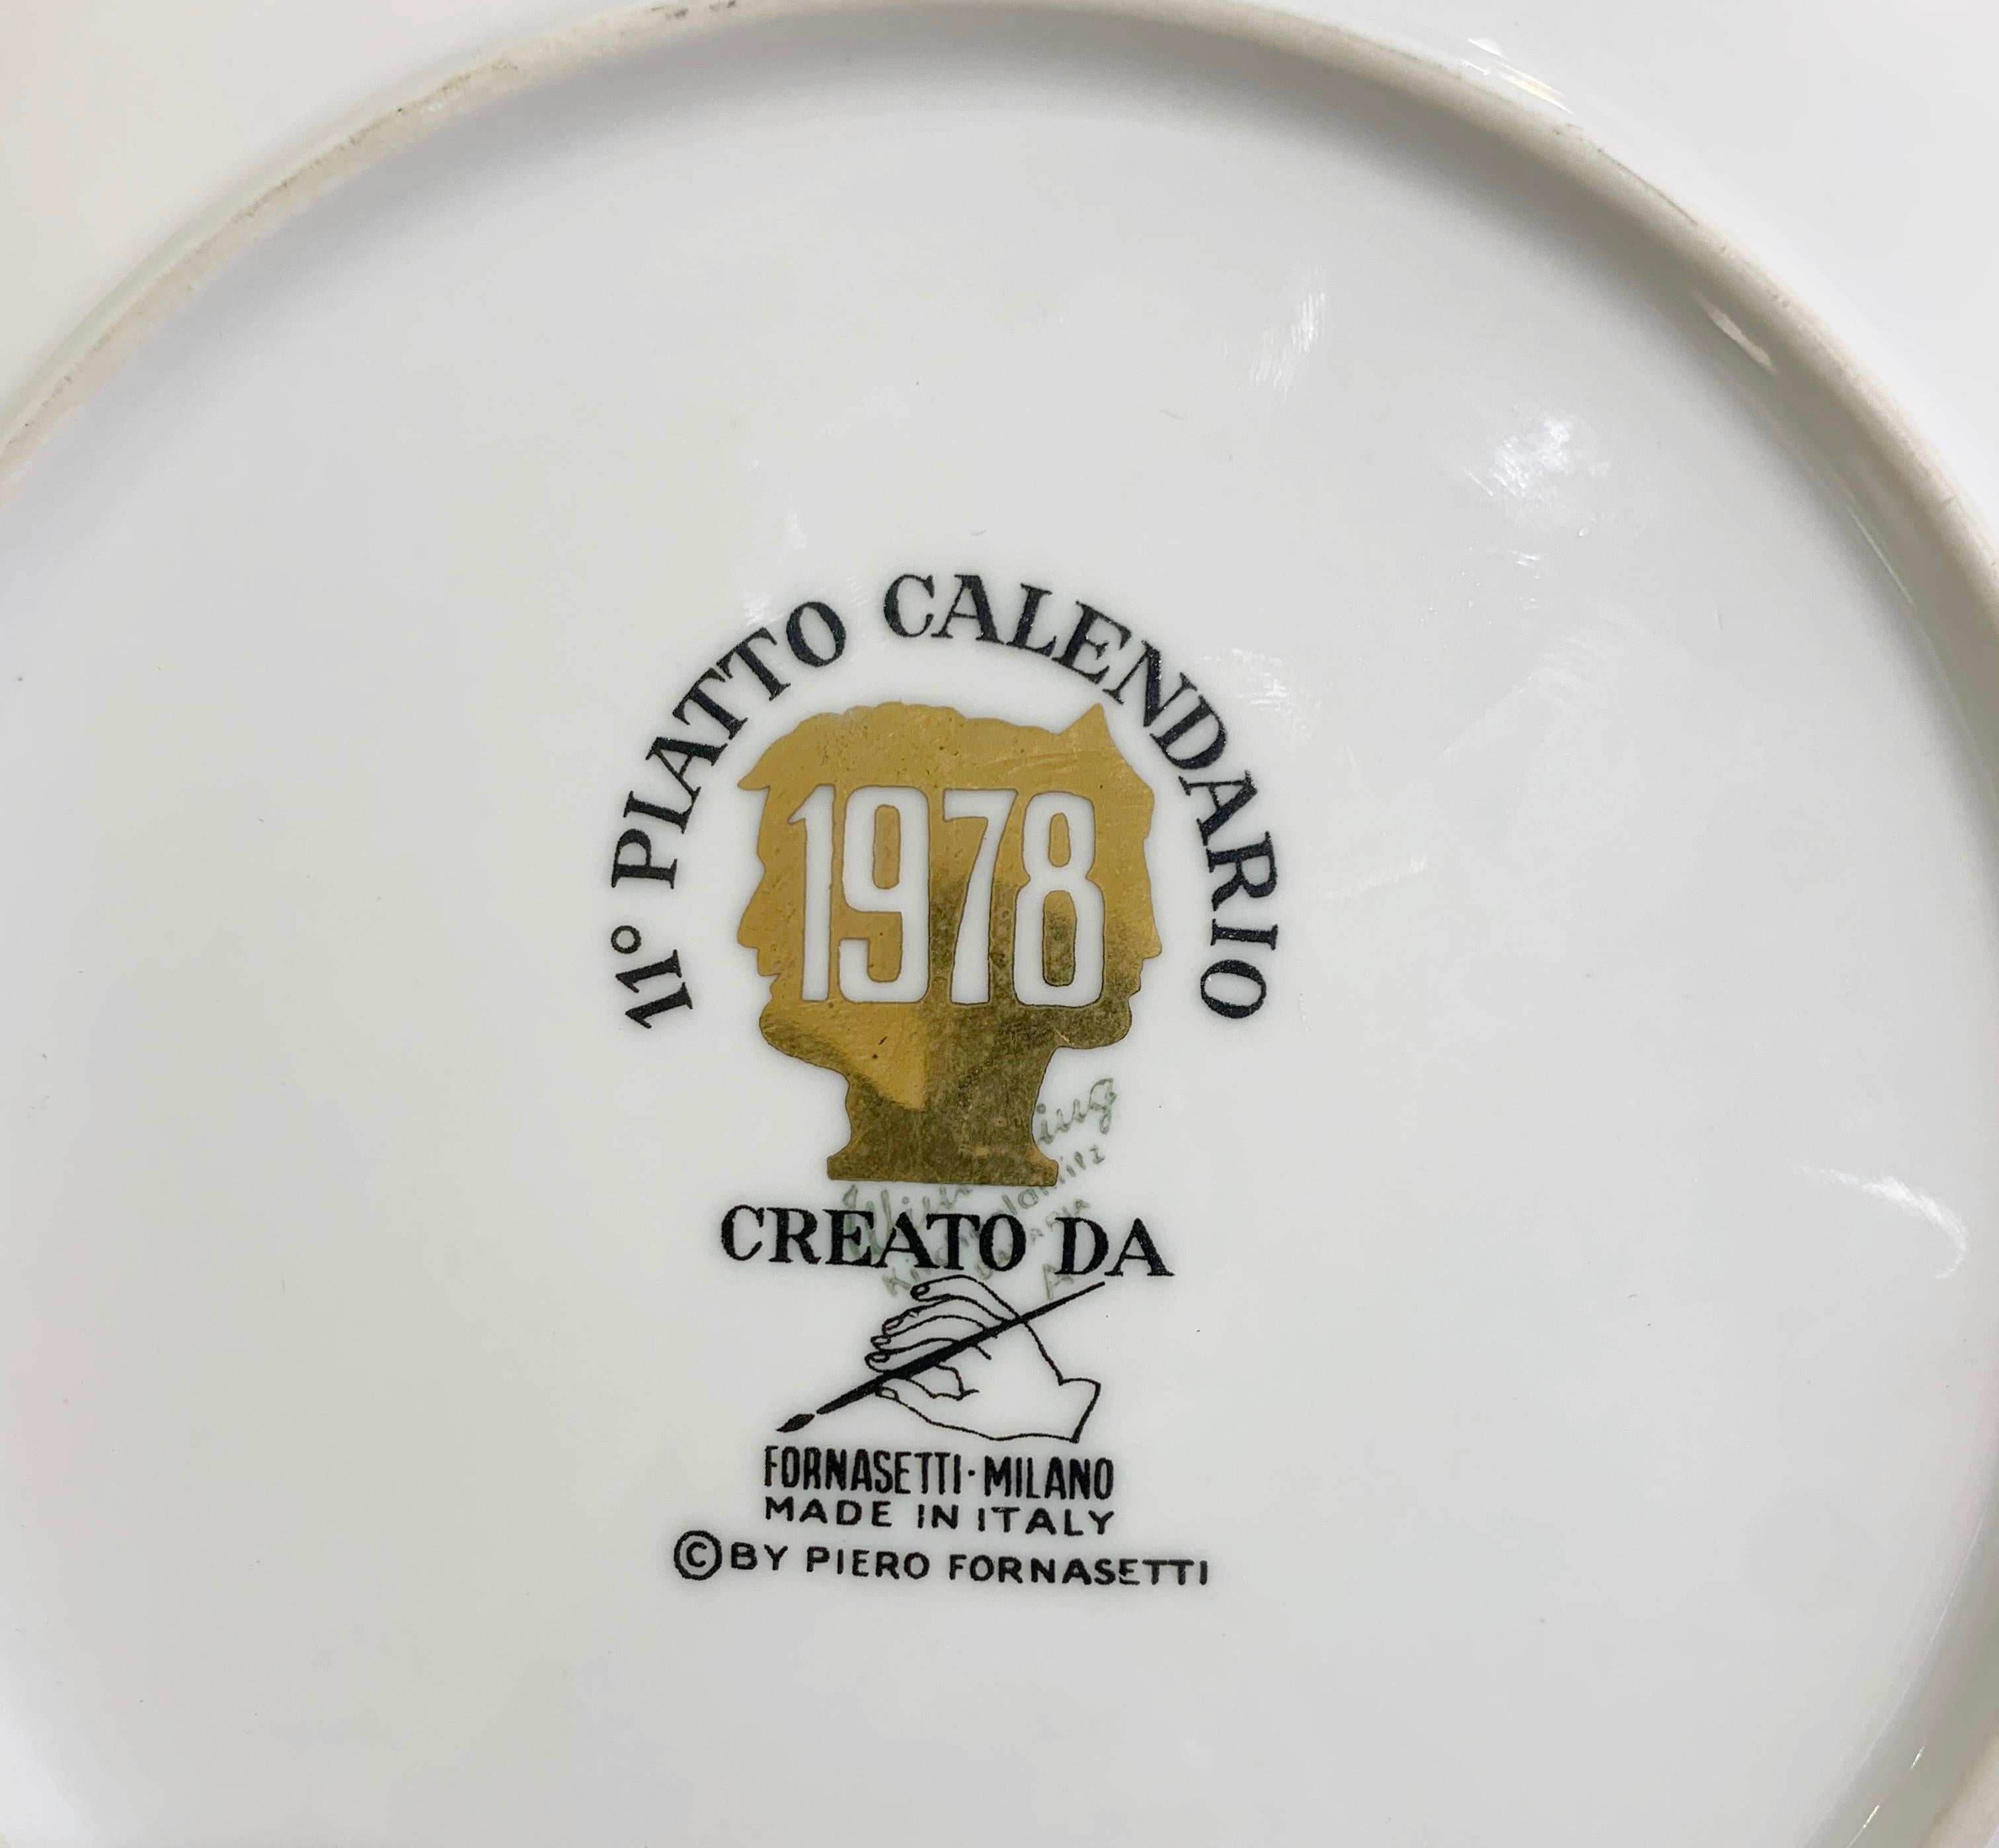 Piero Fornasetti calendar porcelain plate for the Year 1978.